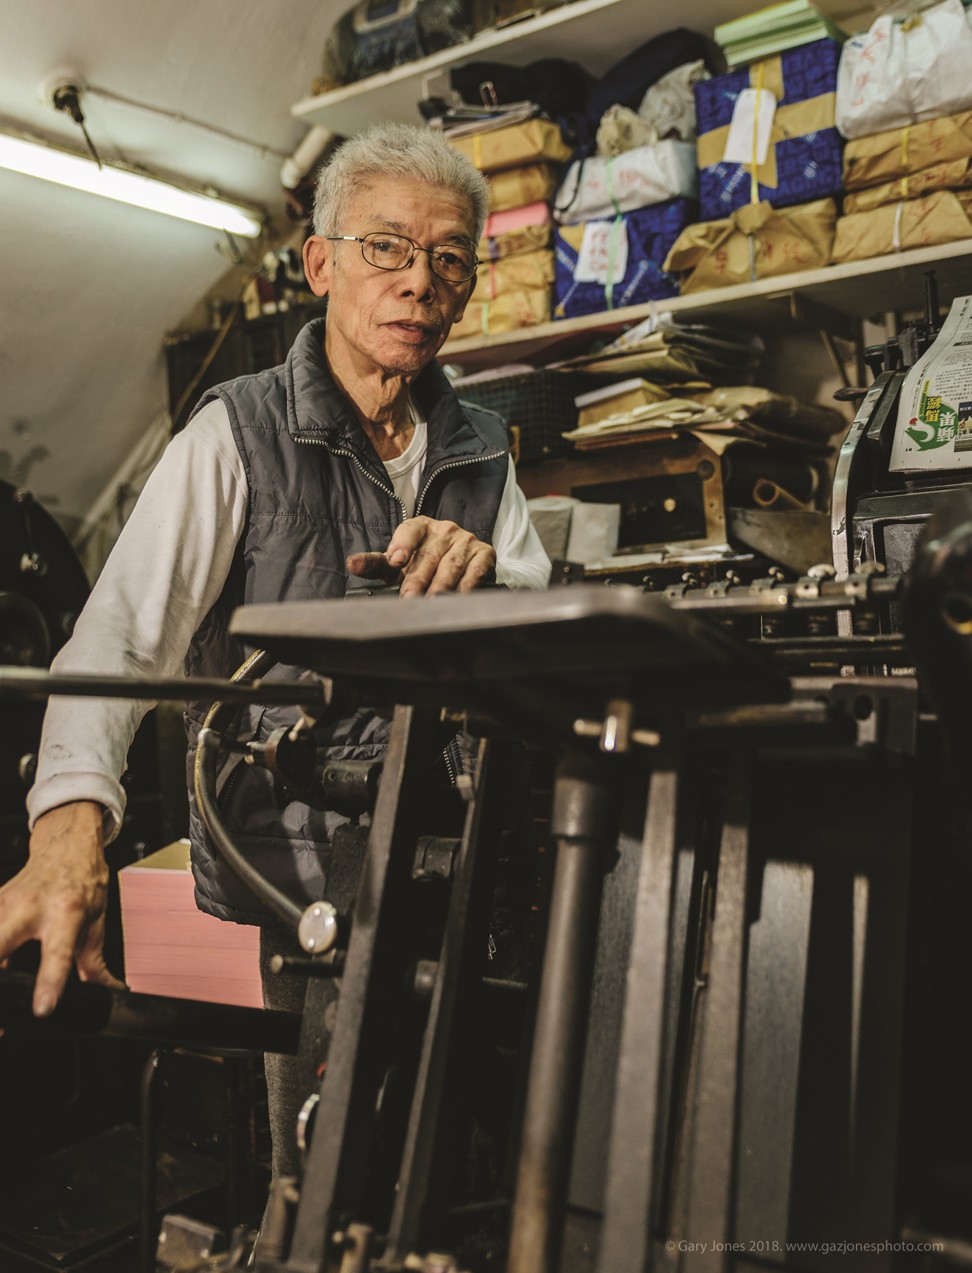 Wong Shue-yau opened his printing shop with his wife 44 years ago. Photo: Gary Jones